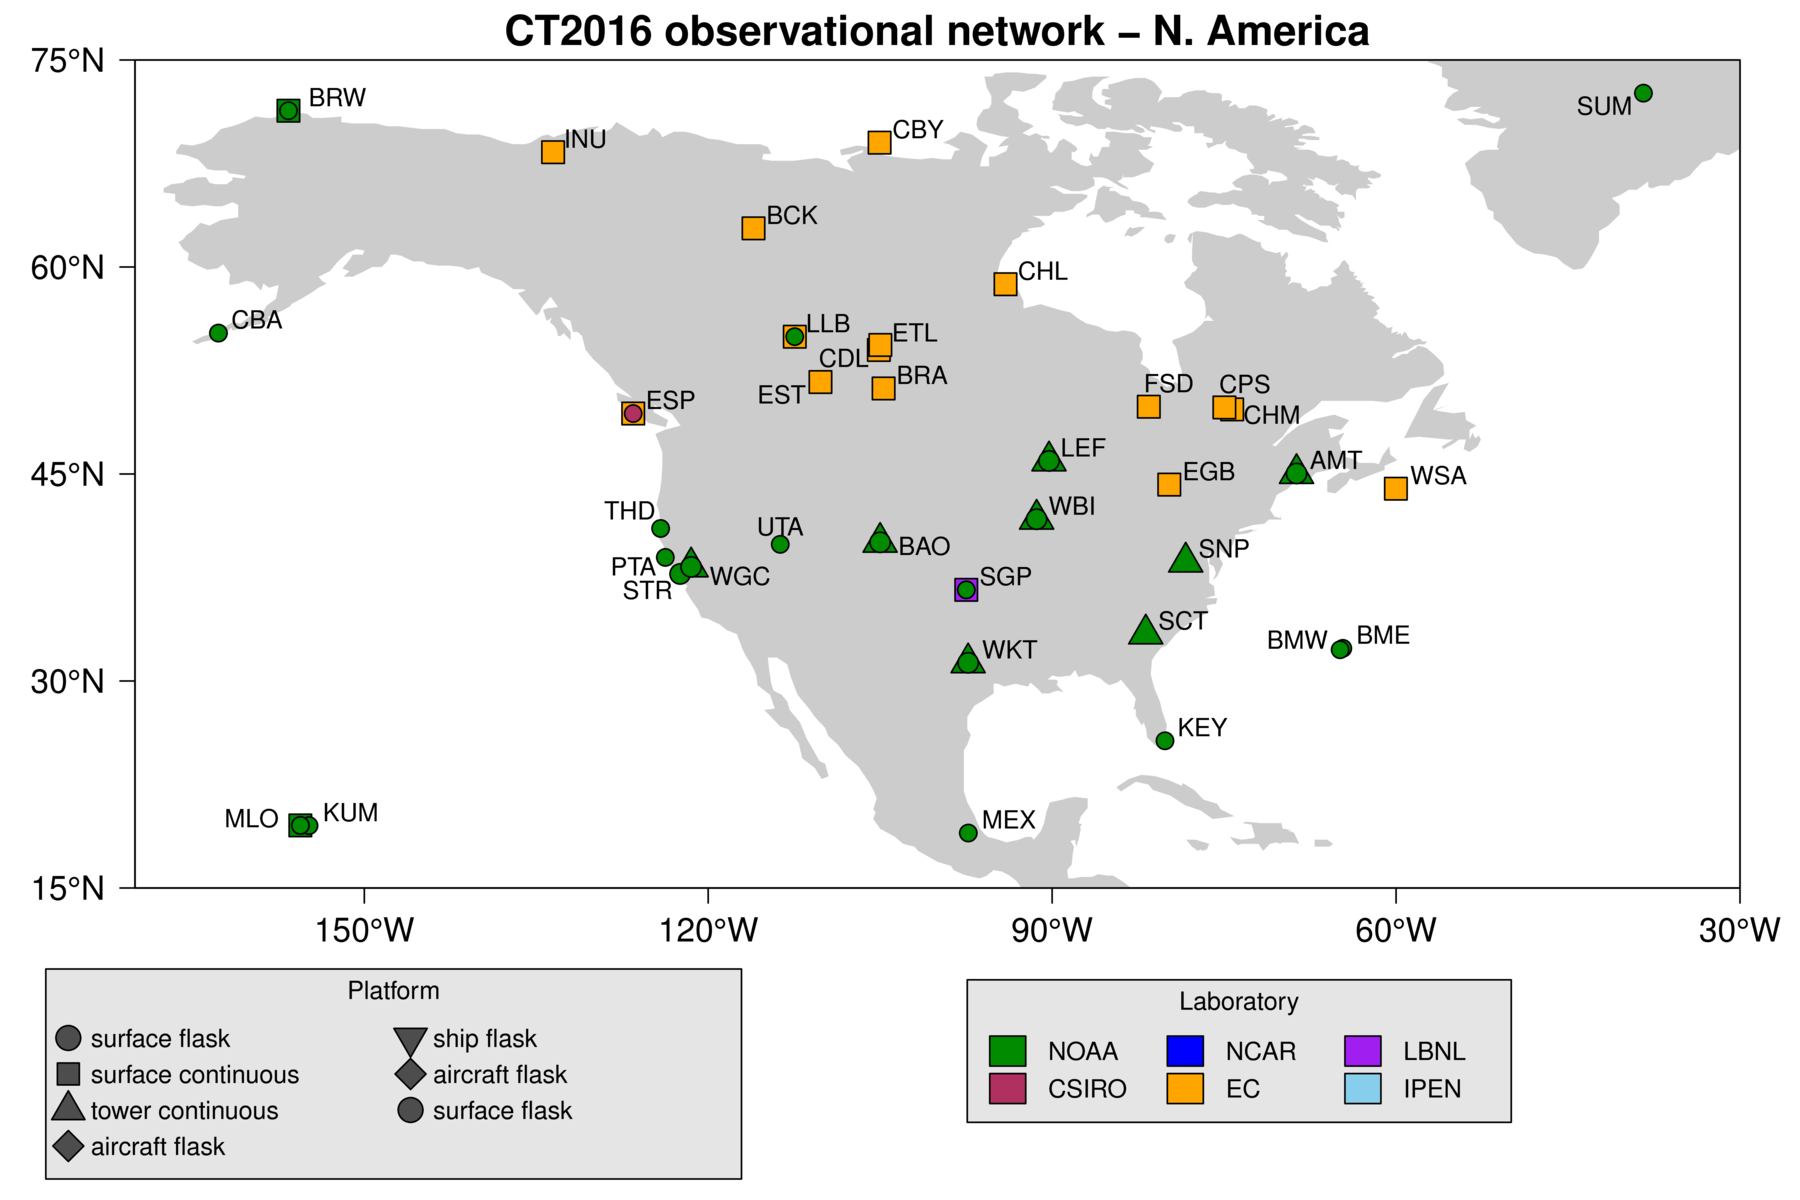 /webdata/ccgg/CT2016/summary/network-nam.png